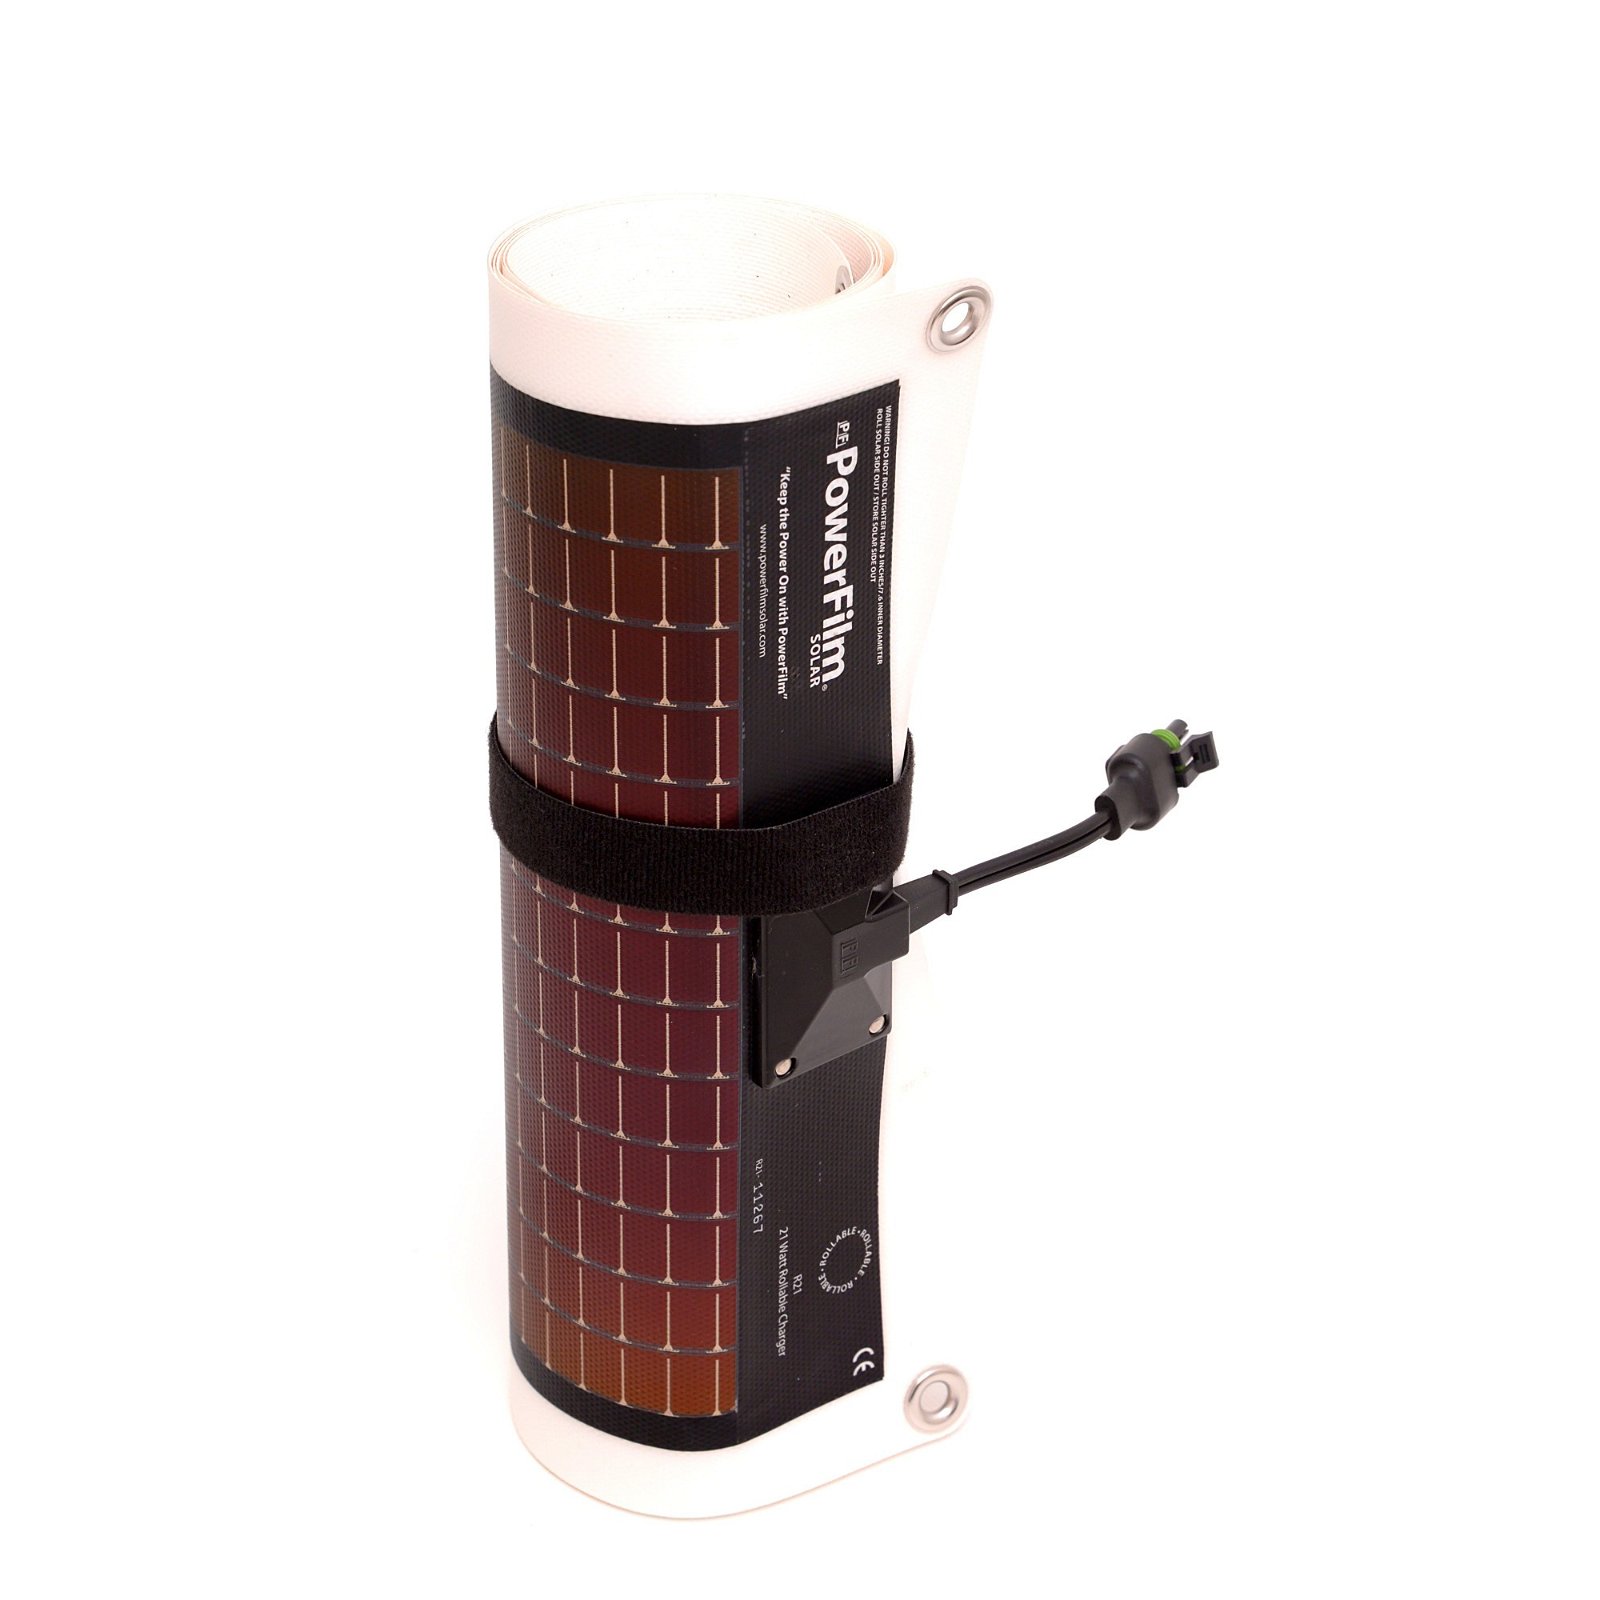 Solar panel R7 - 7W 368x584mm - retractable